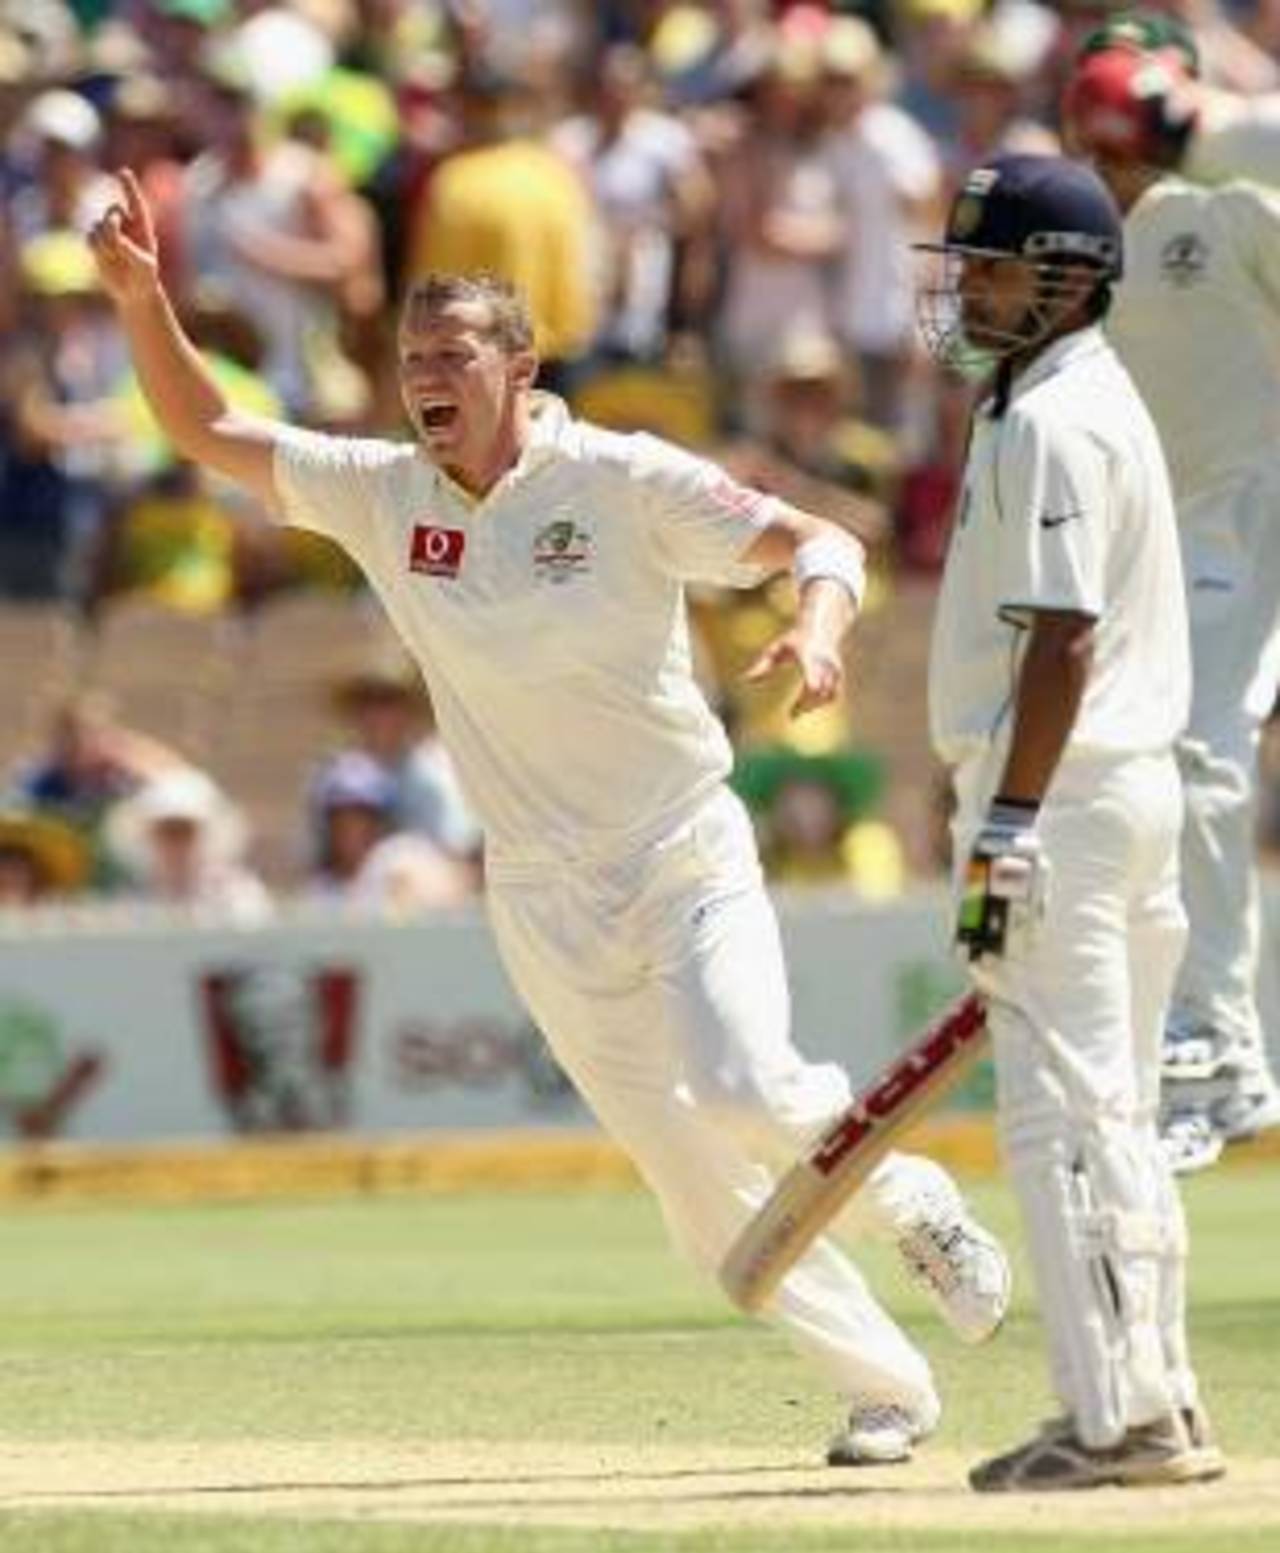 Peter Siddle nips out Gautam Gambhir, Australia v India, 4th Test, Adelaide, 3rd day, January 26, 2012